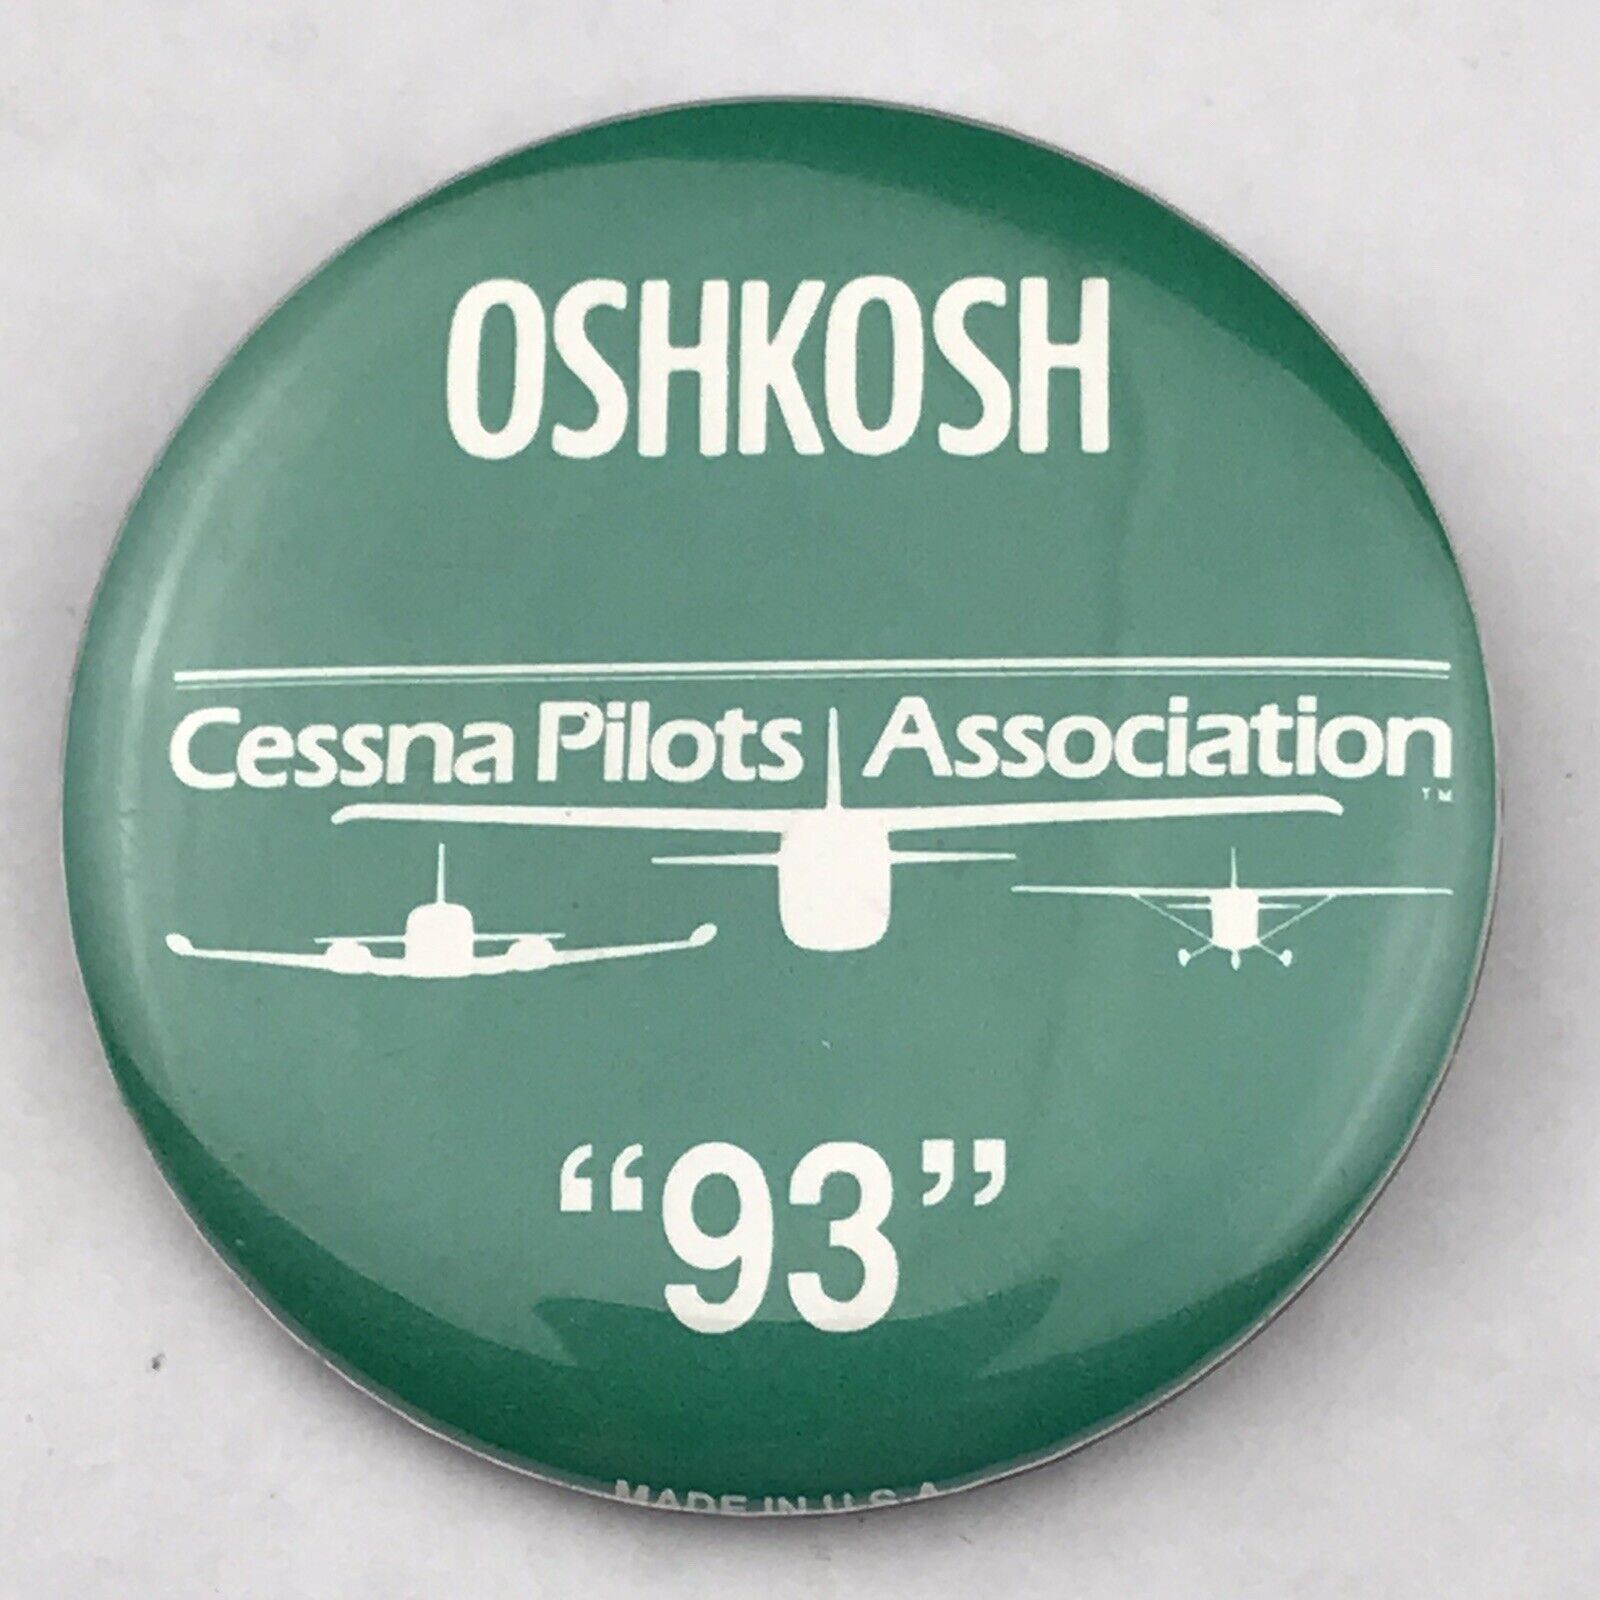 Oshkosh Cessna Pilots Association 1993 Vintage Pin Button Pinback 90s Aviation